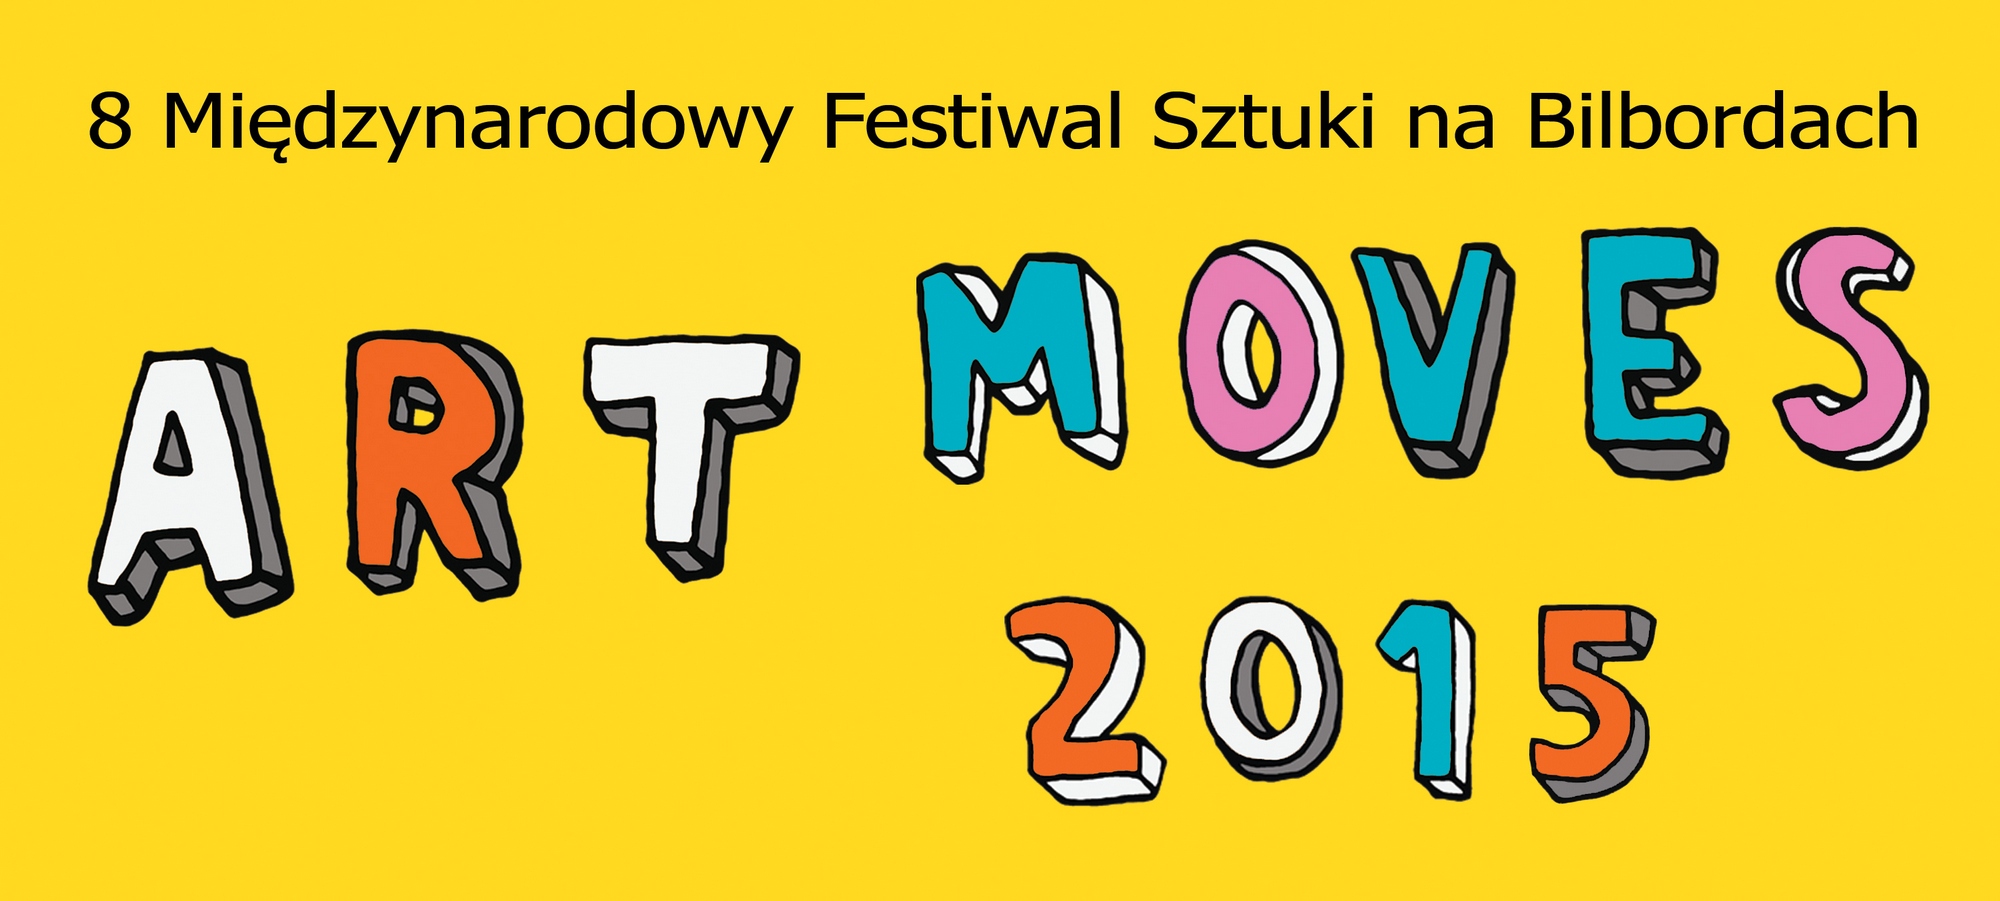 Festiwal Sztuki na Bilbordach Art Moves 2015 – baner (źródło: materiały prasowe organizatora)